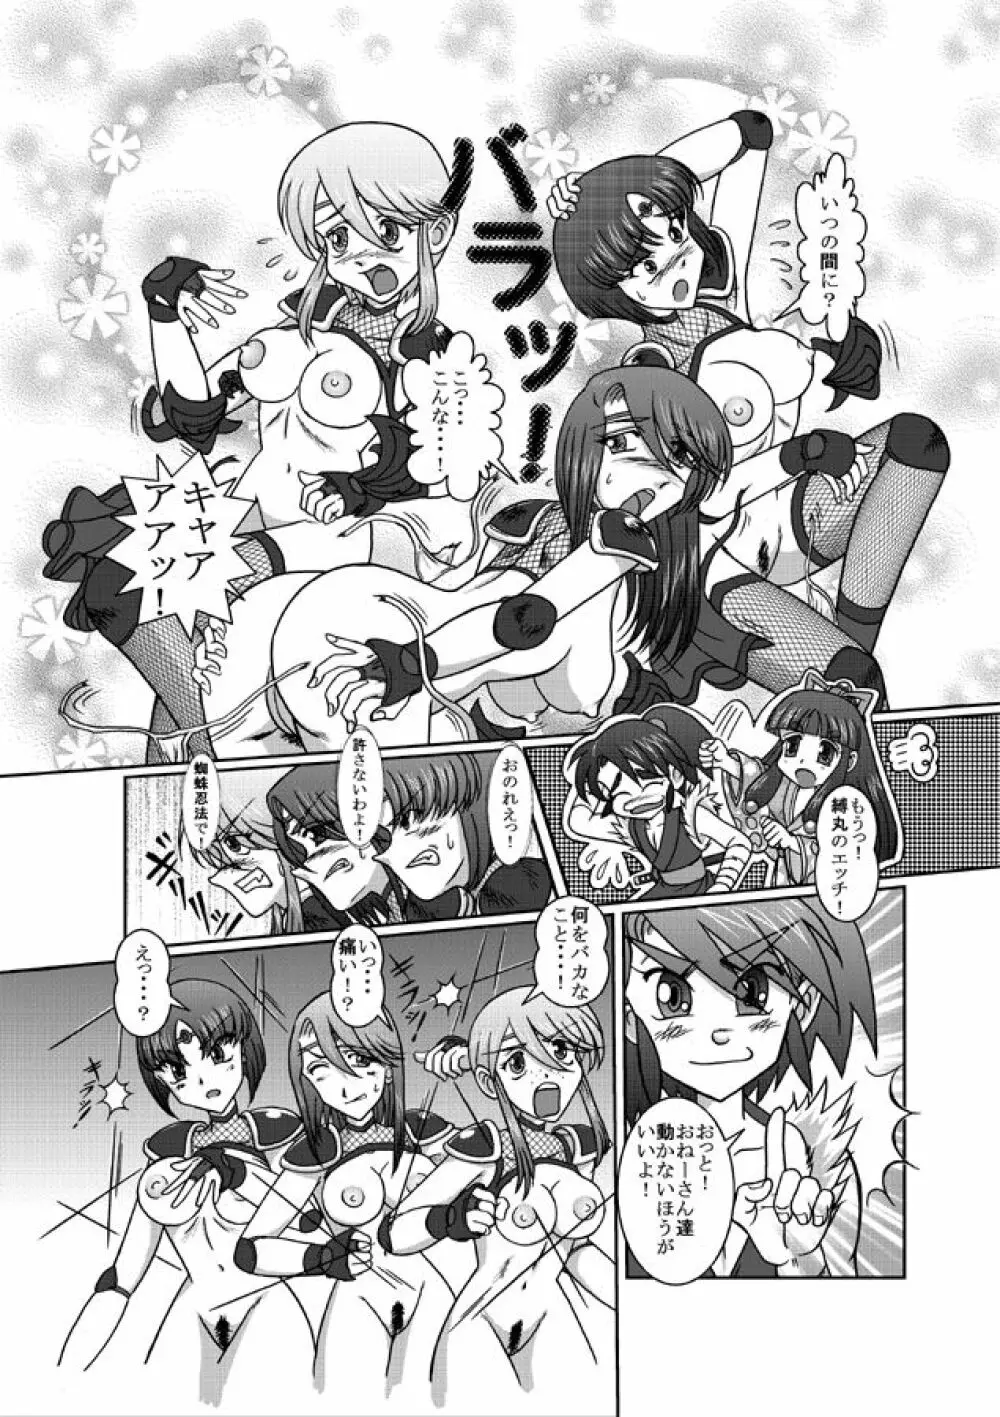 Same-themed manga about kid fighting female ninjas from japanese imageboard. 26ページ